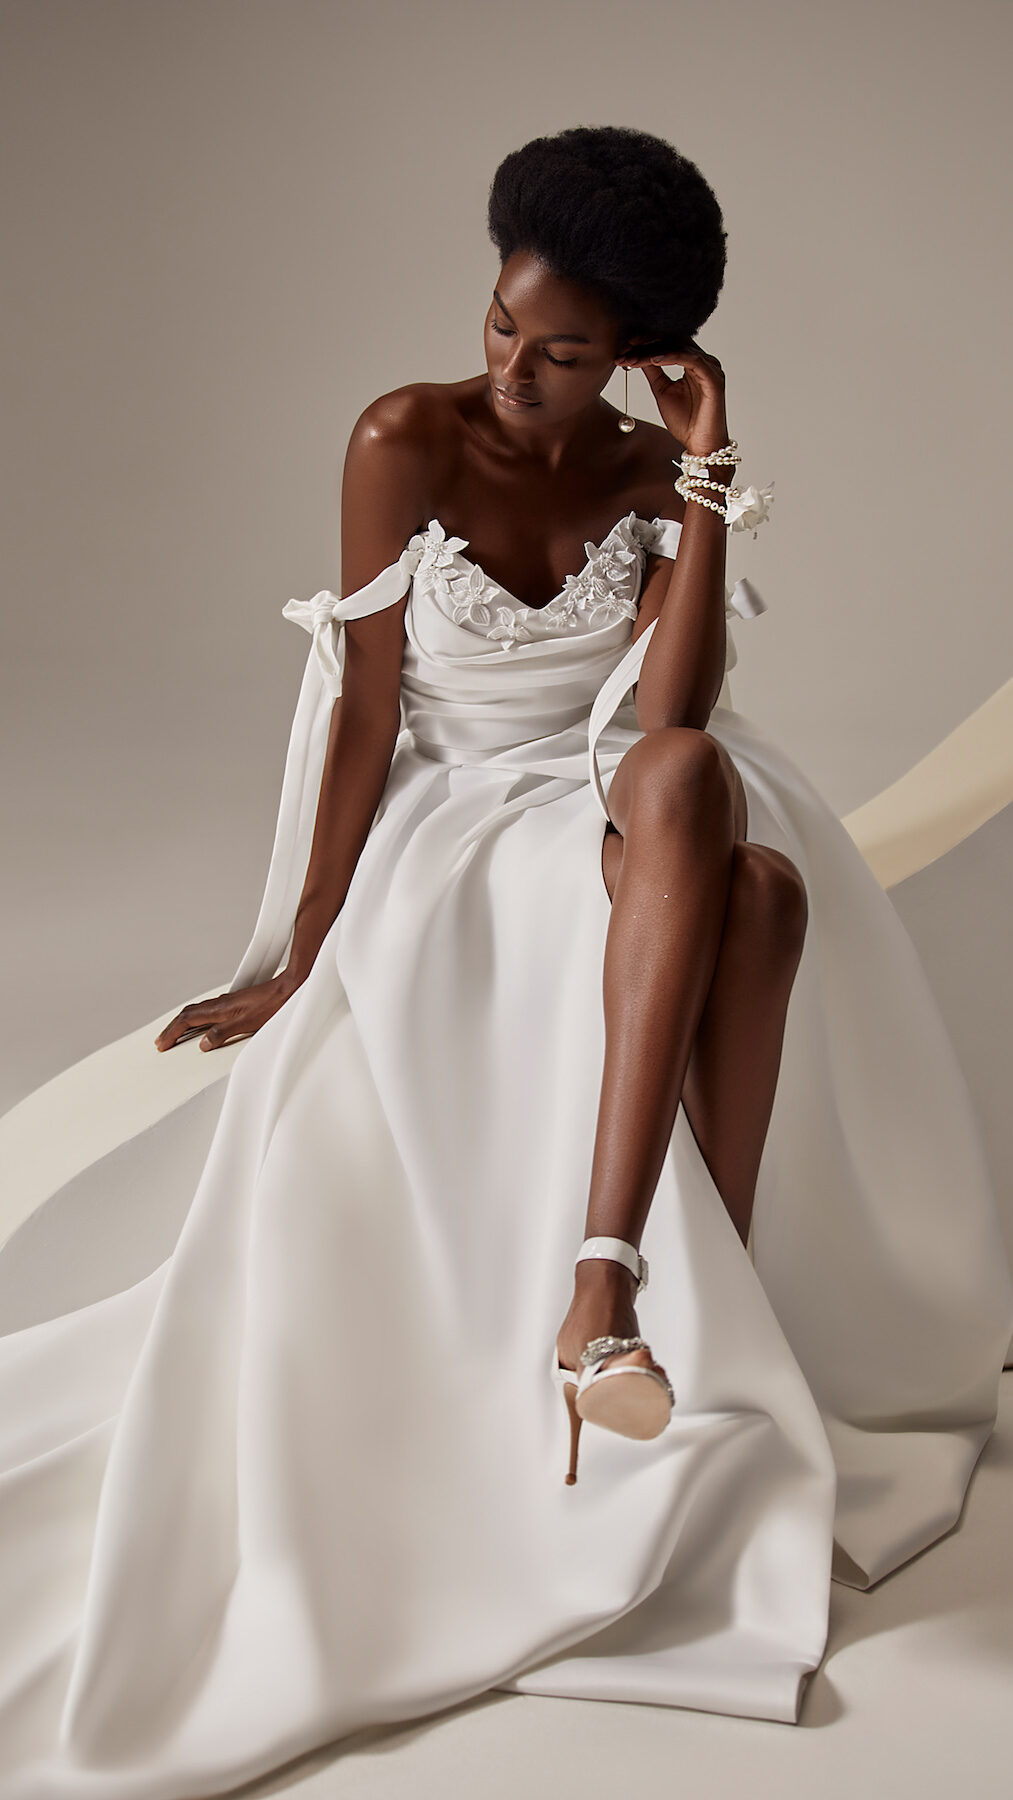 Ball gown Wedding Dress by Milla Nova - Lima white lace